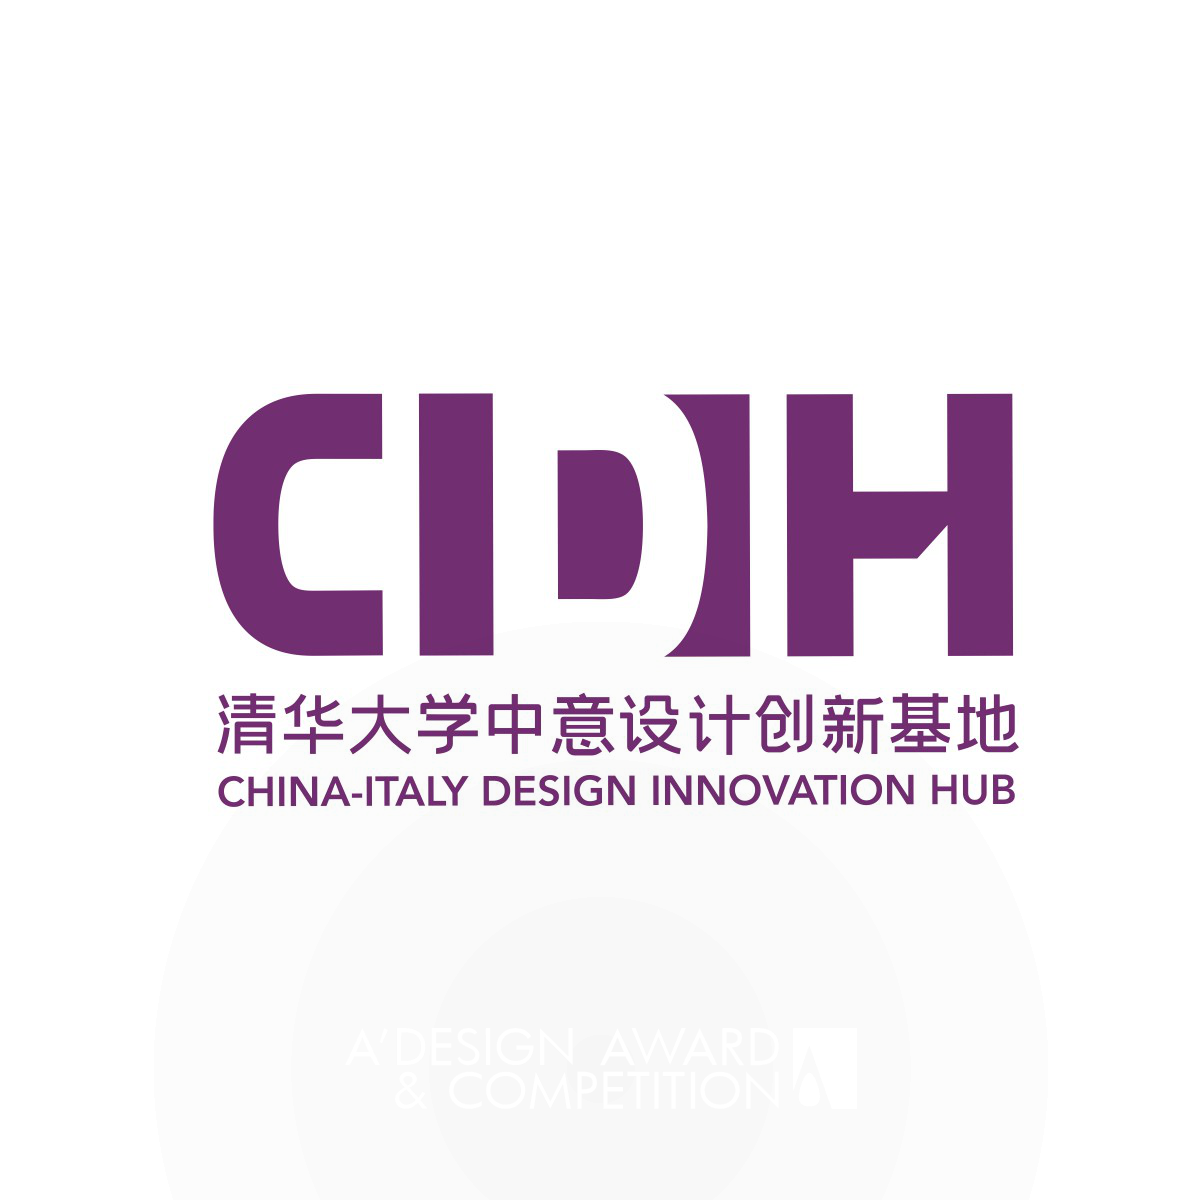 CIDIH Brand Identity by Peng Wang